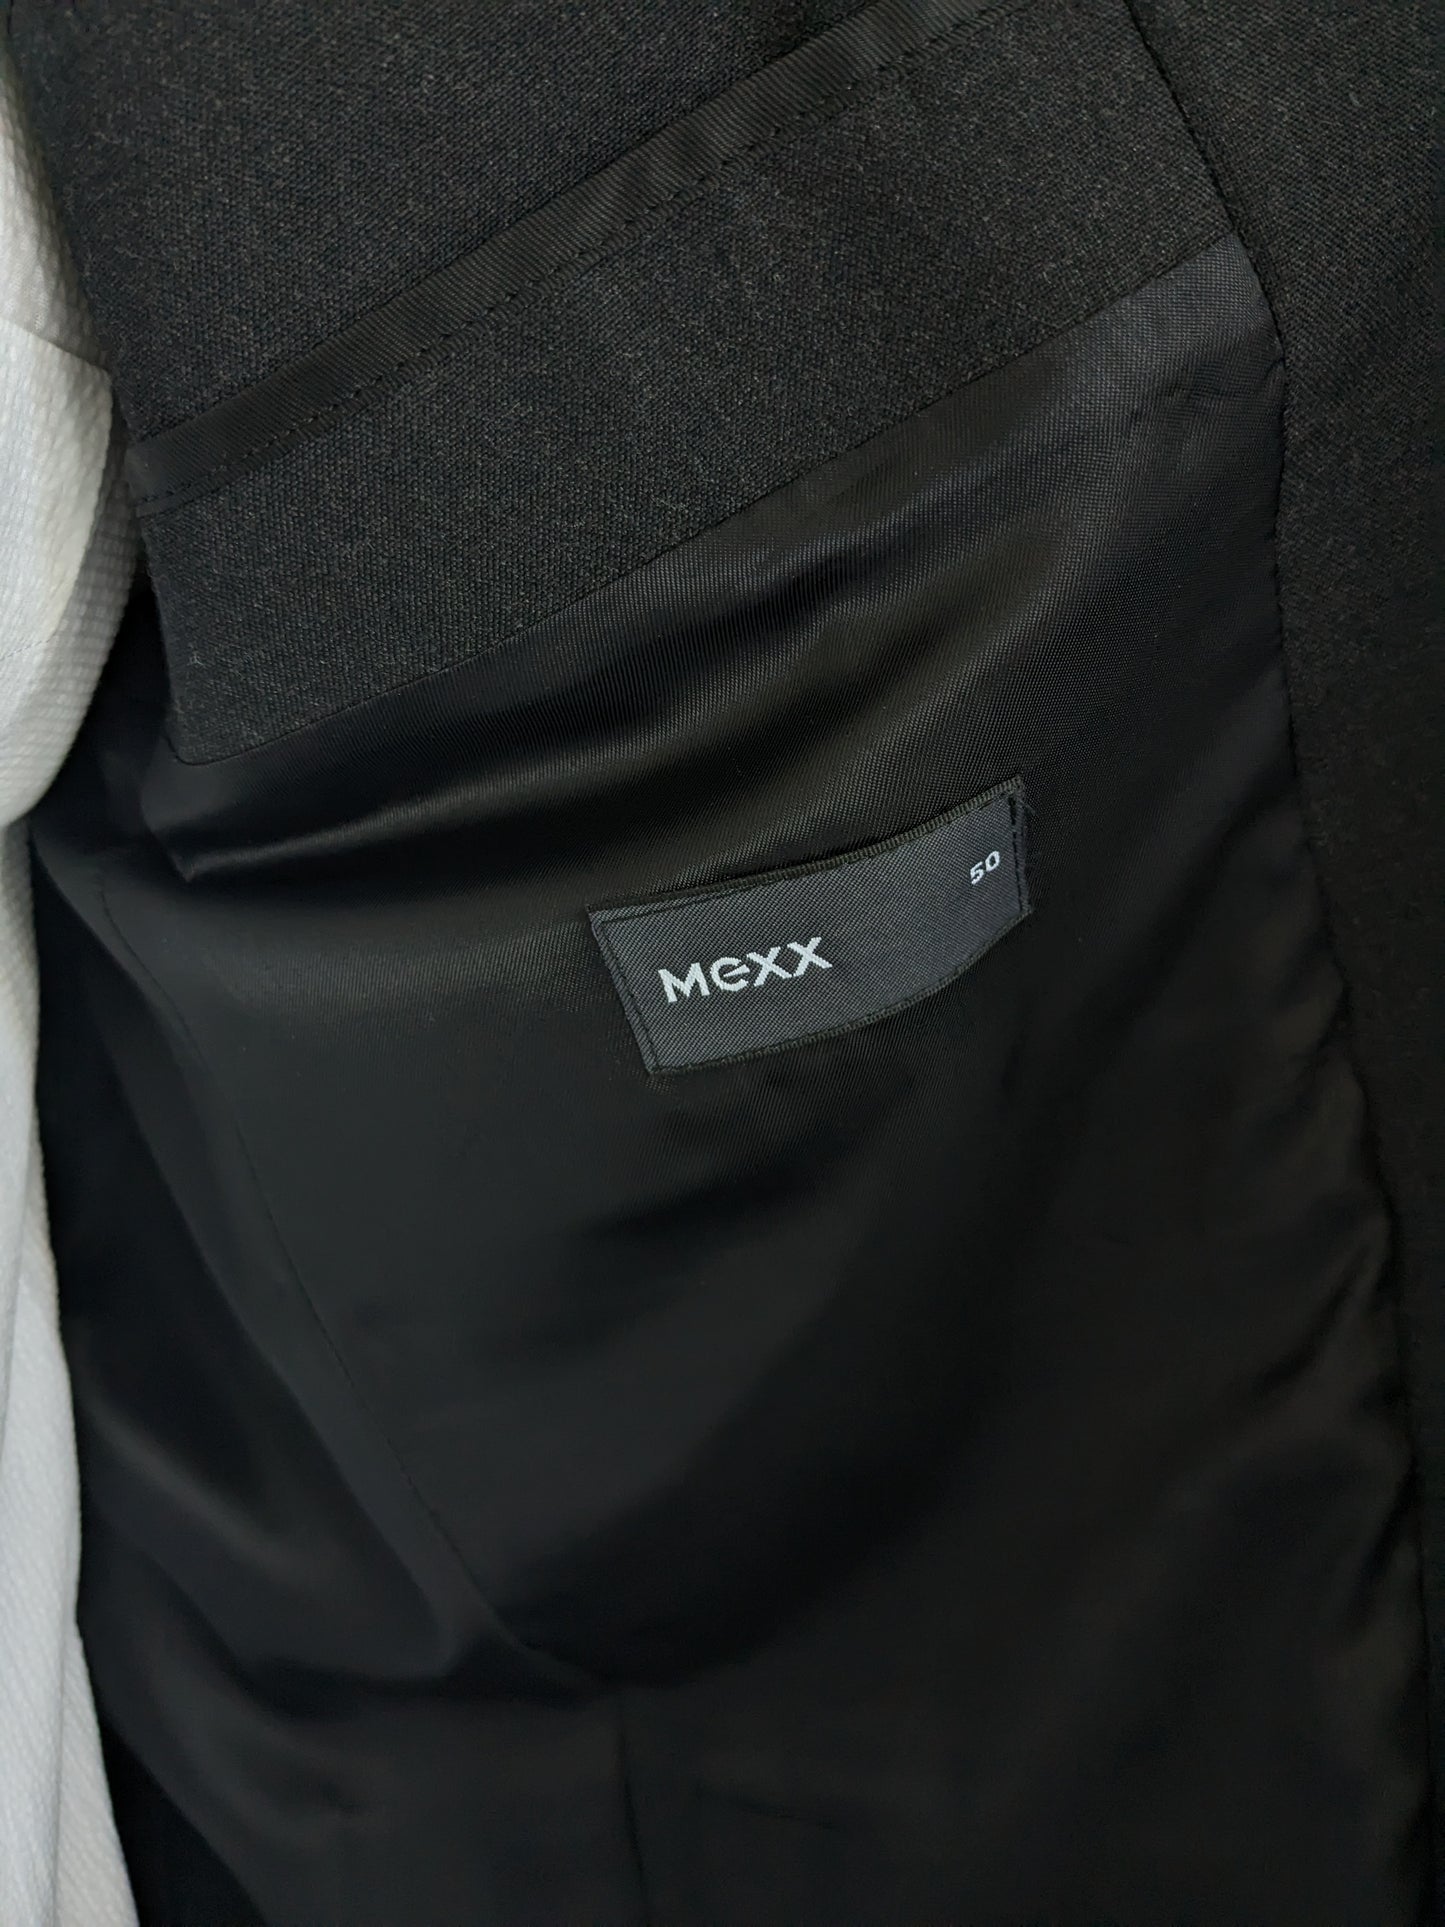 Mexx jacket. Dark gray colored. Size 50 / M.